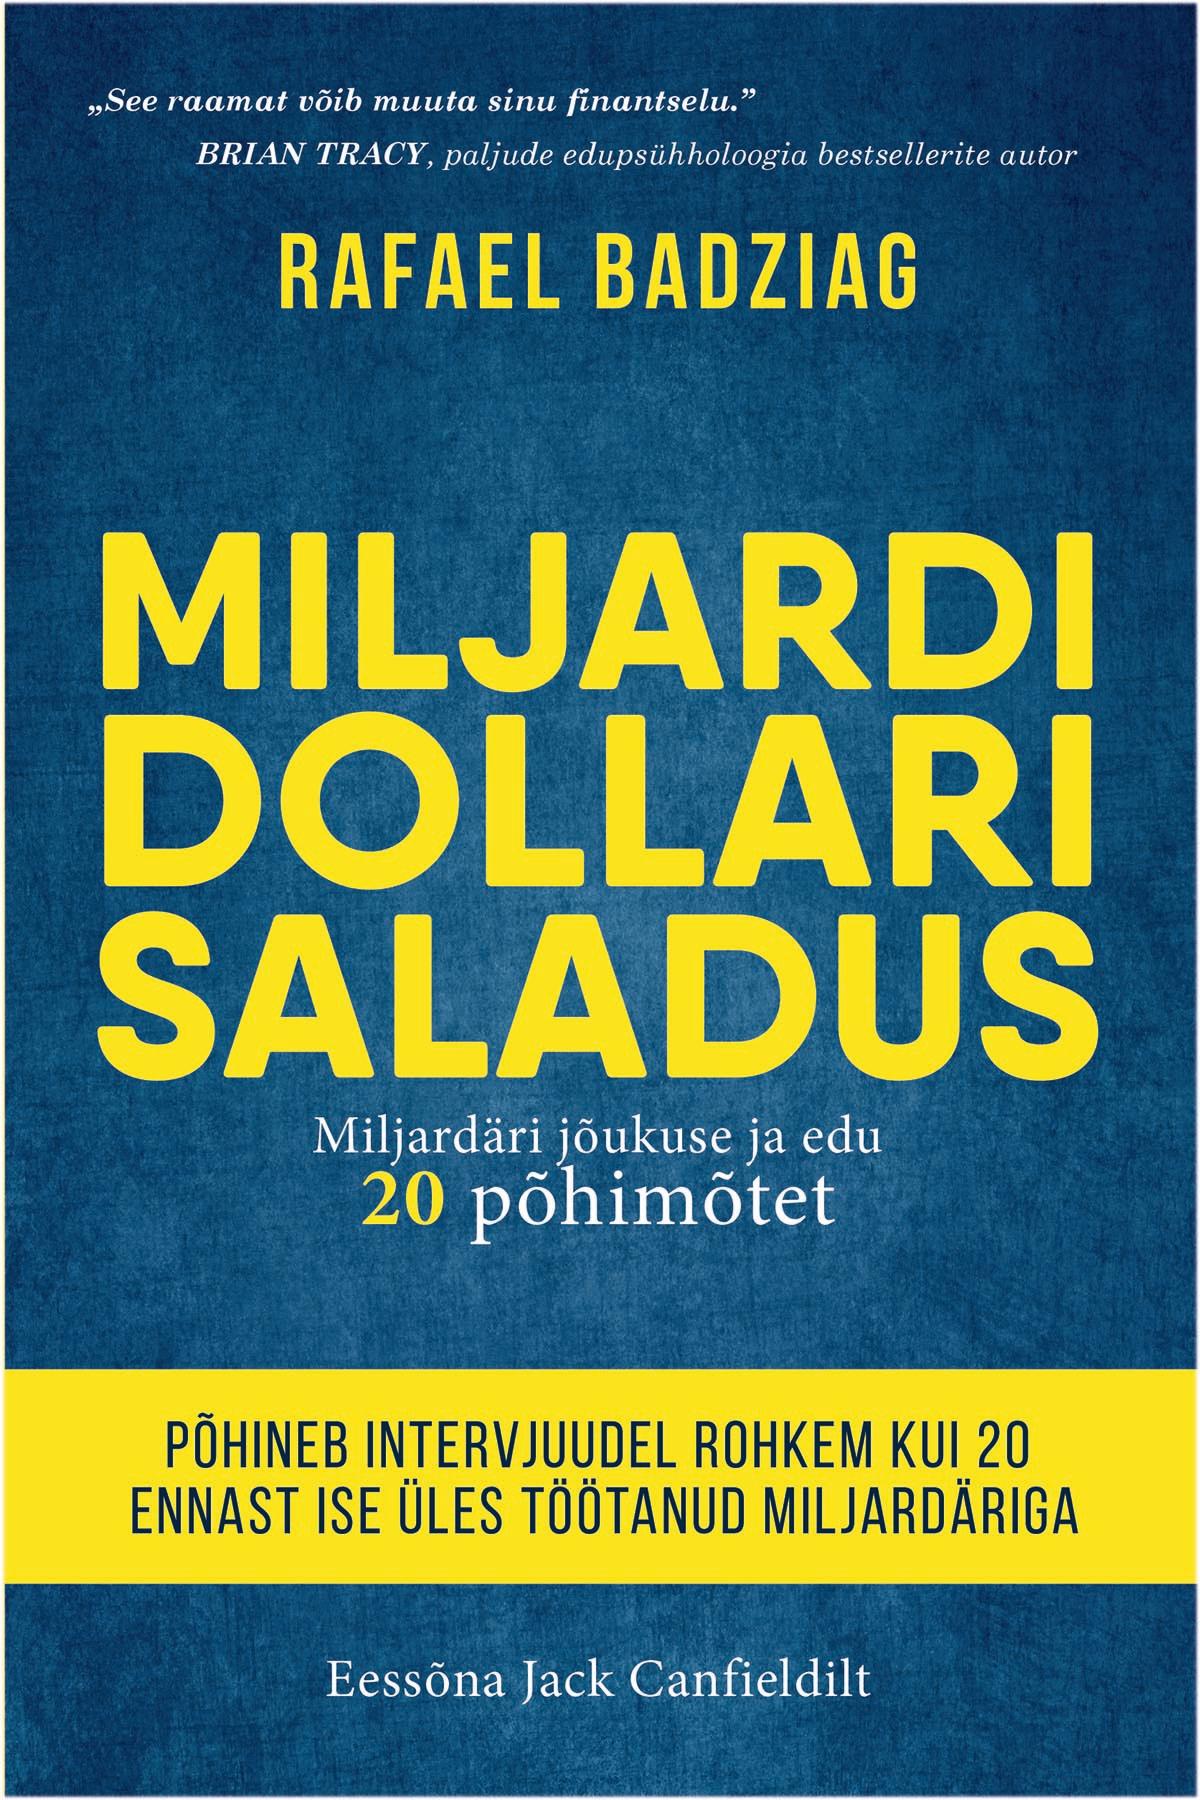 MILJARDI DOLLARI SALADUS